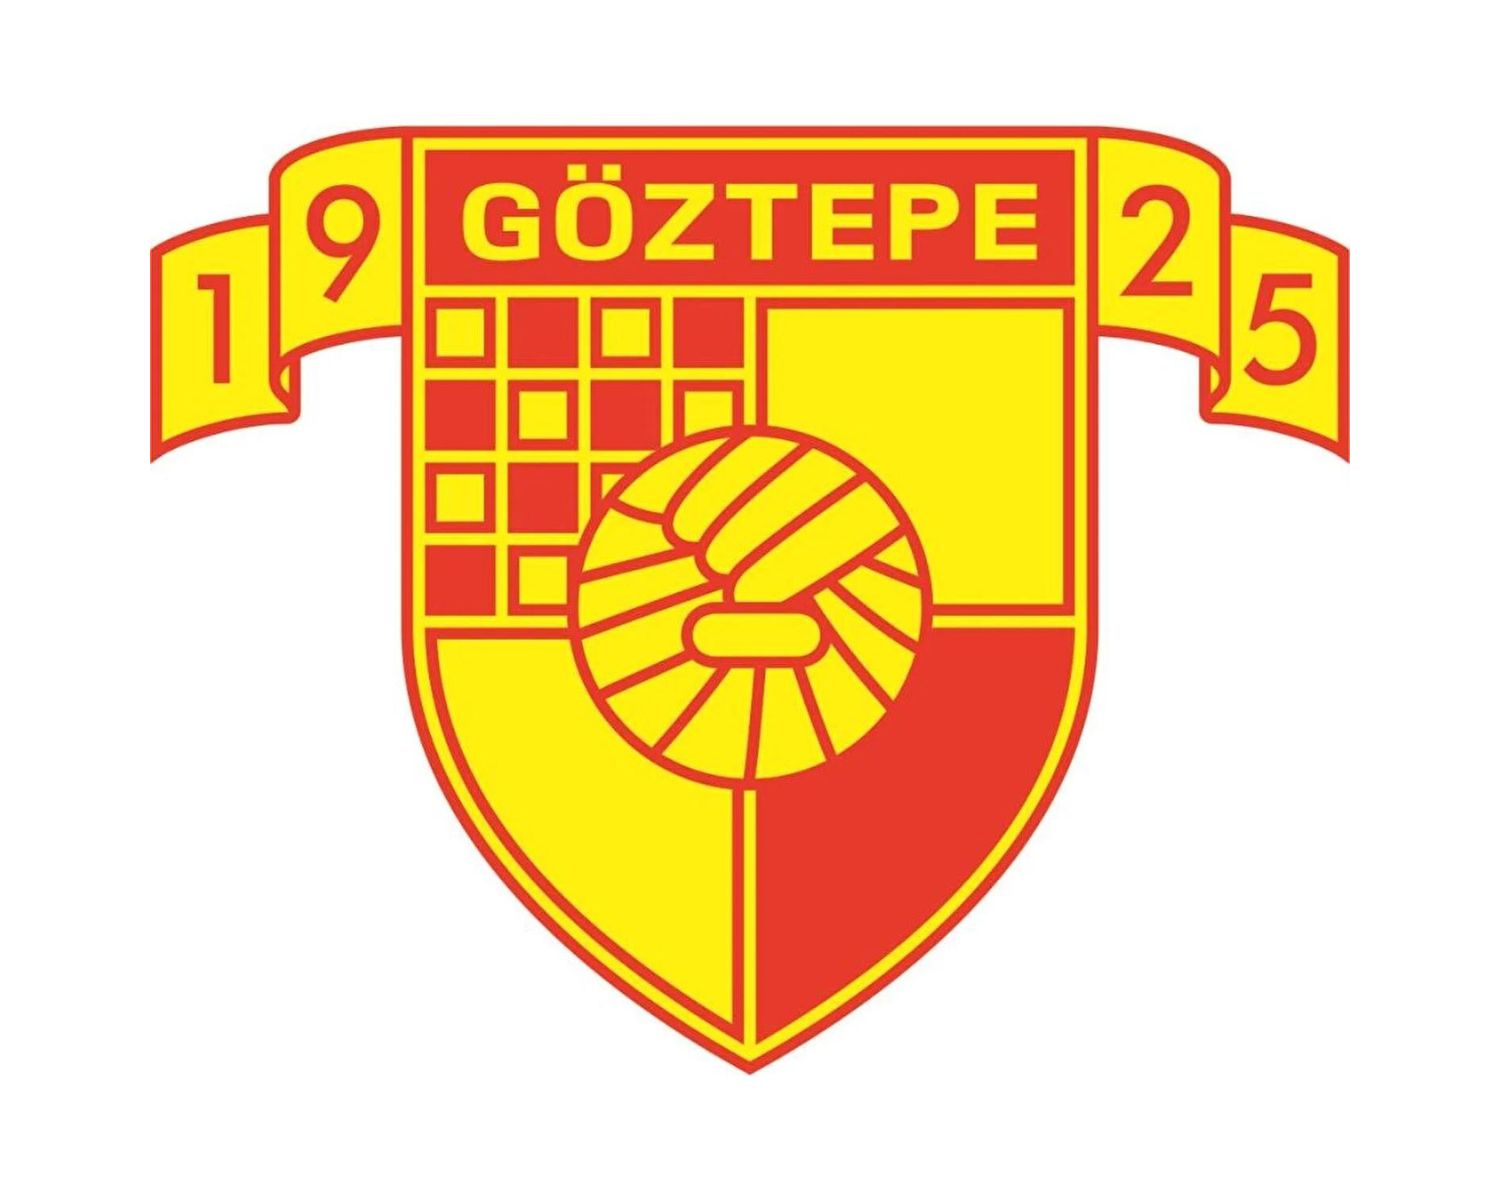 goztepe-sk-18-football-club-facts